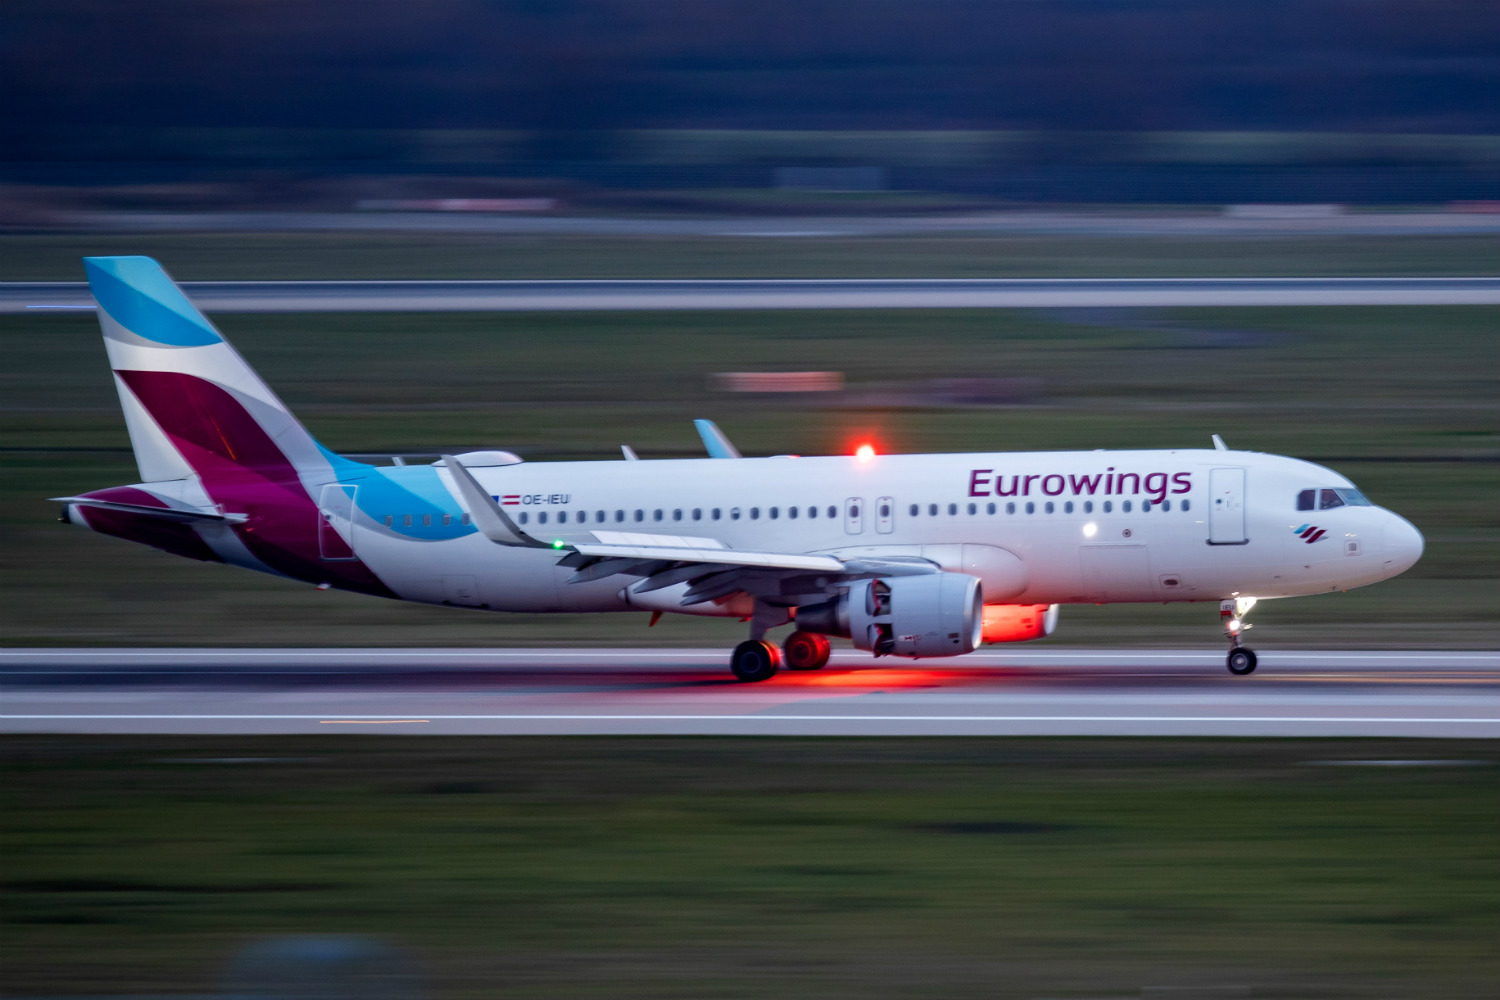 Eurowings airplane on tarmac at dusk